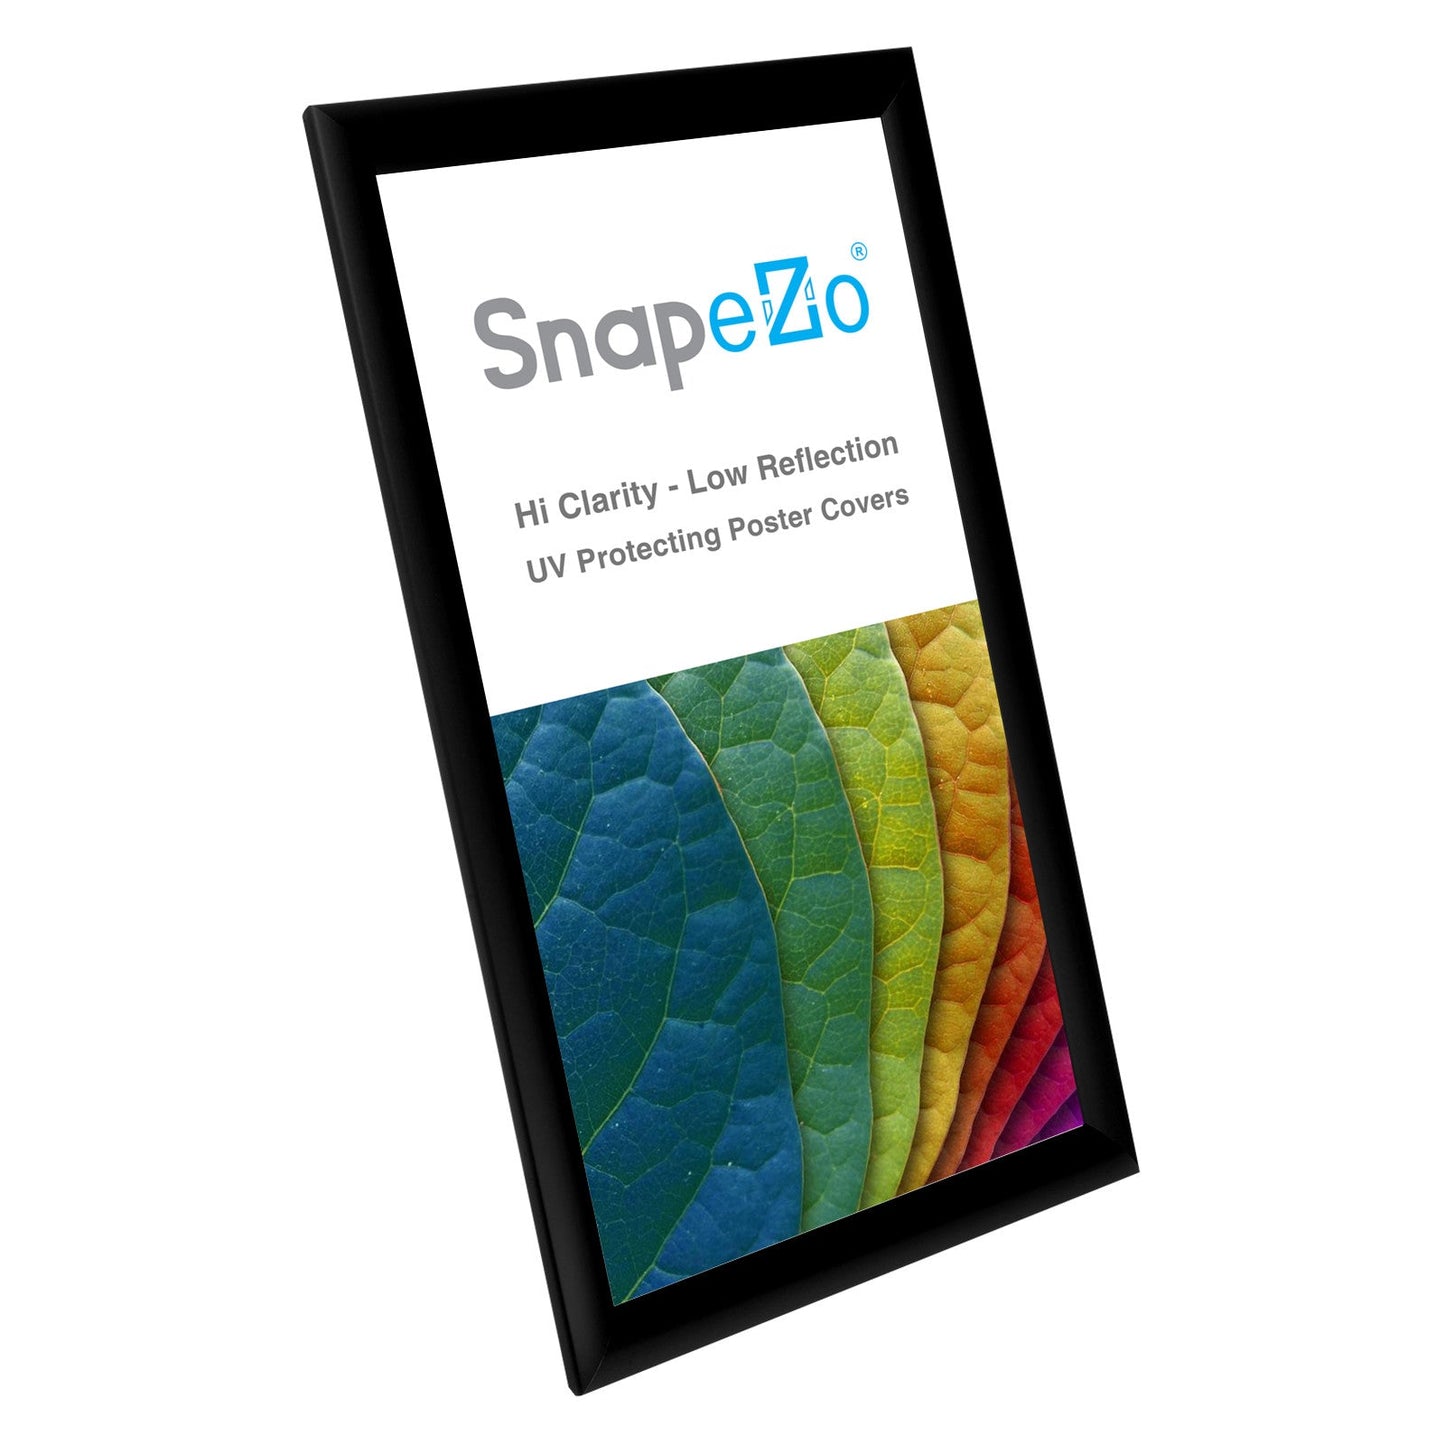 11x22 Black SnapeZo® Snap Frame - 1" Profile